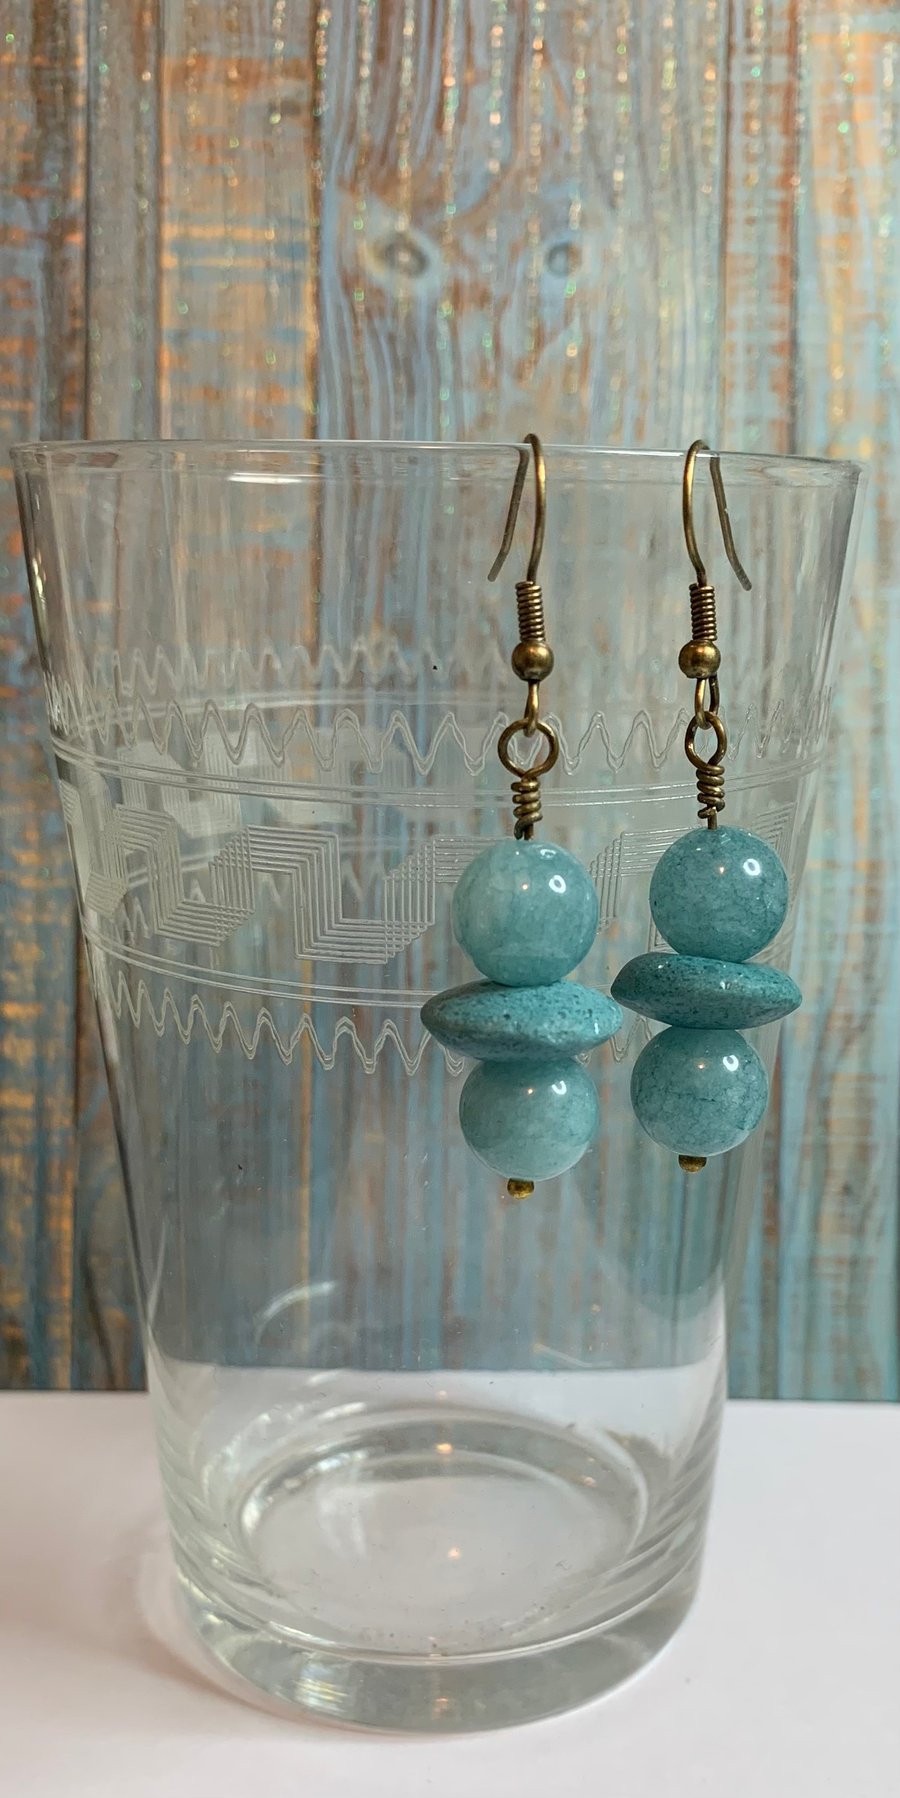 Blue Chalcedony and Teal Ashanti glass earrings.